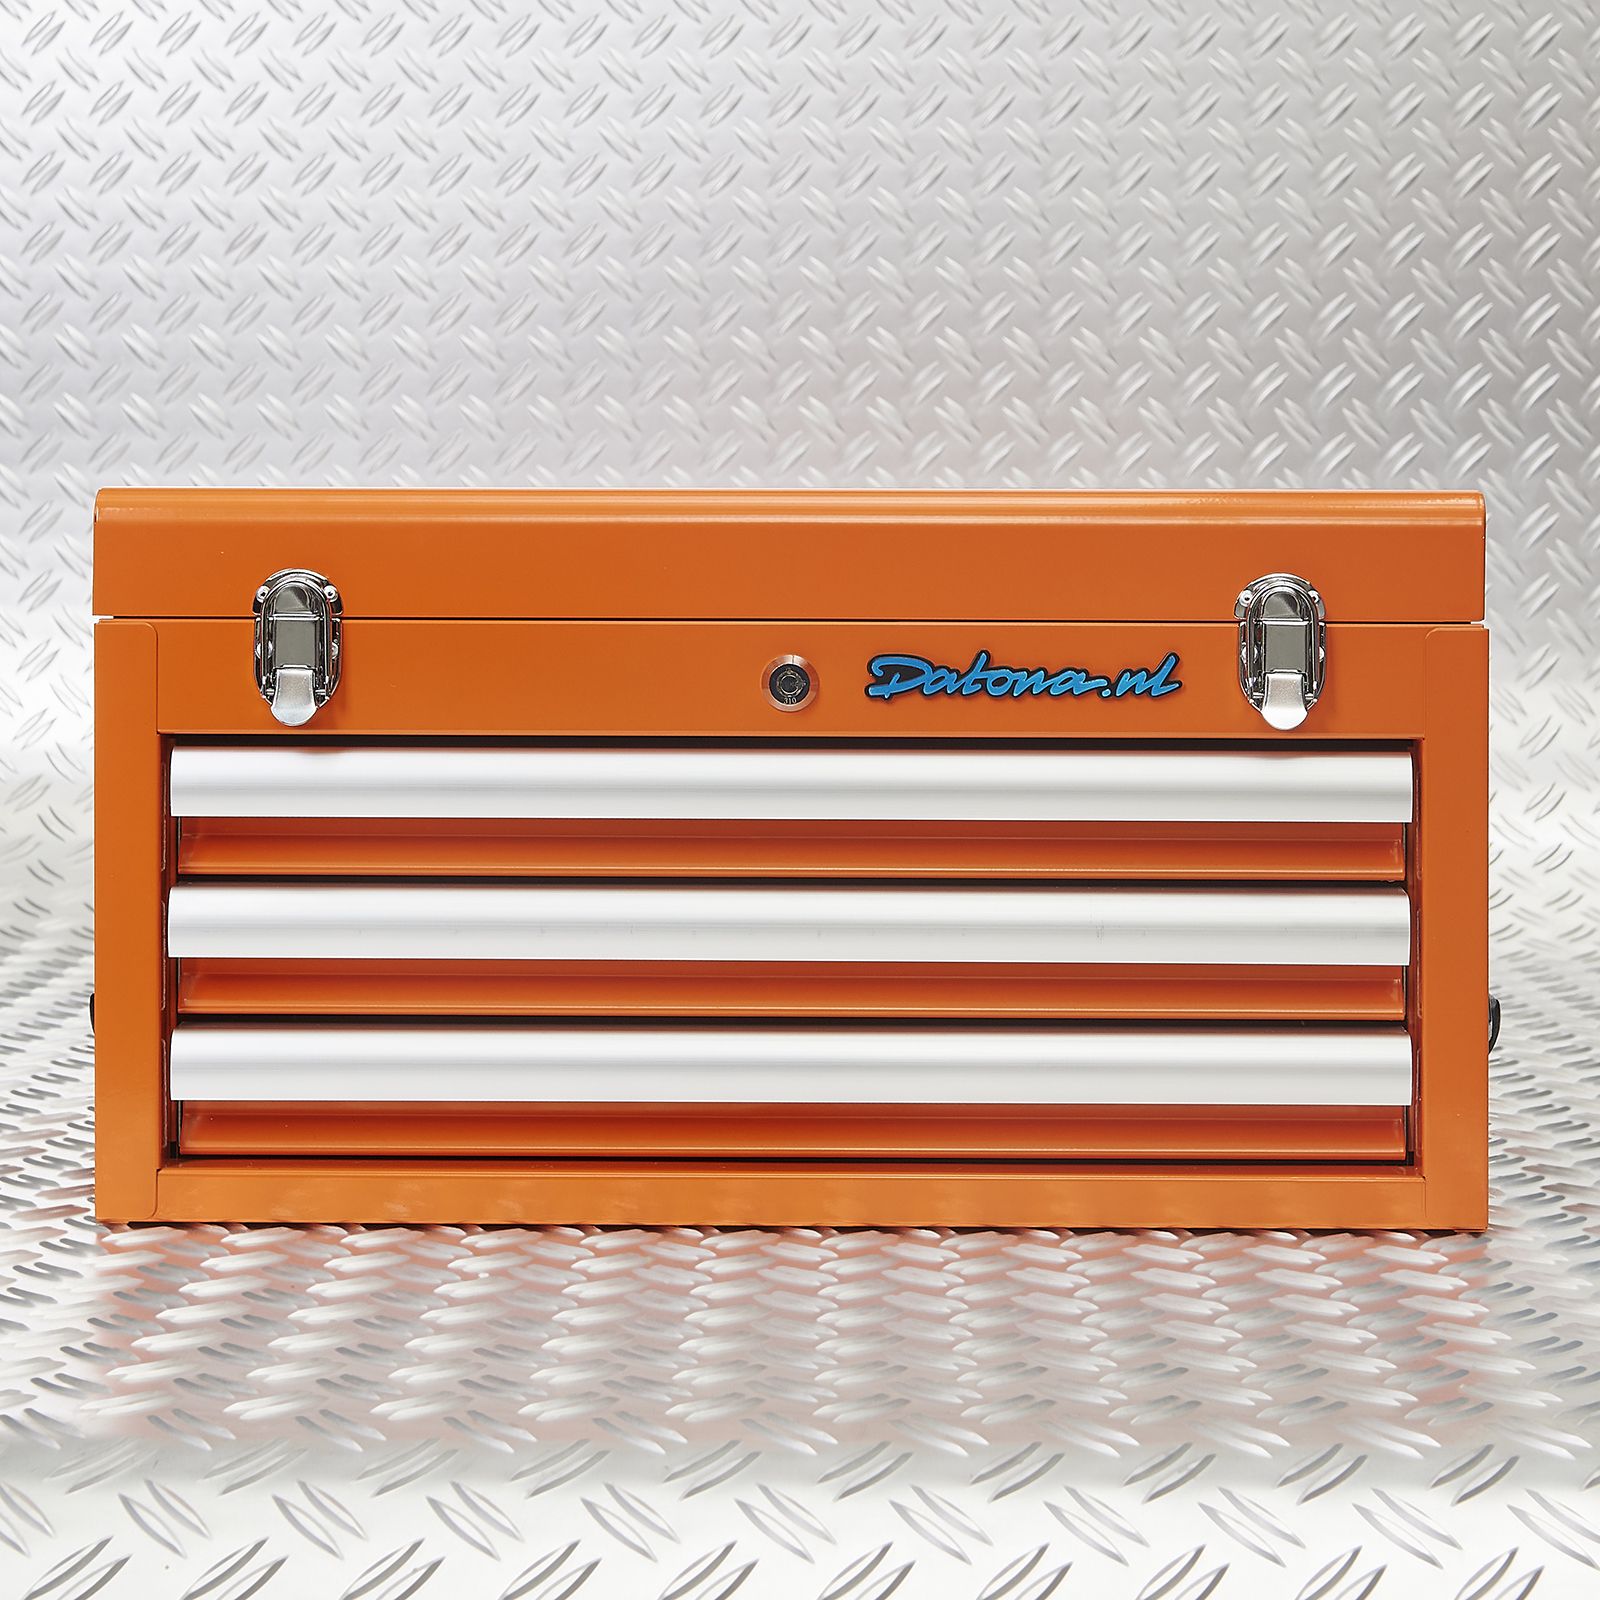 Oranje toolbox recht